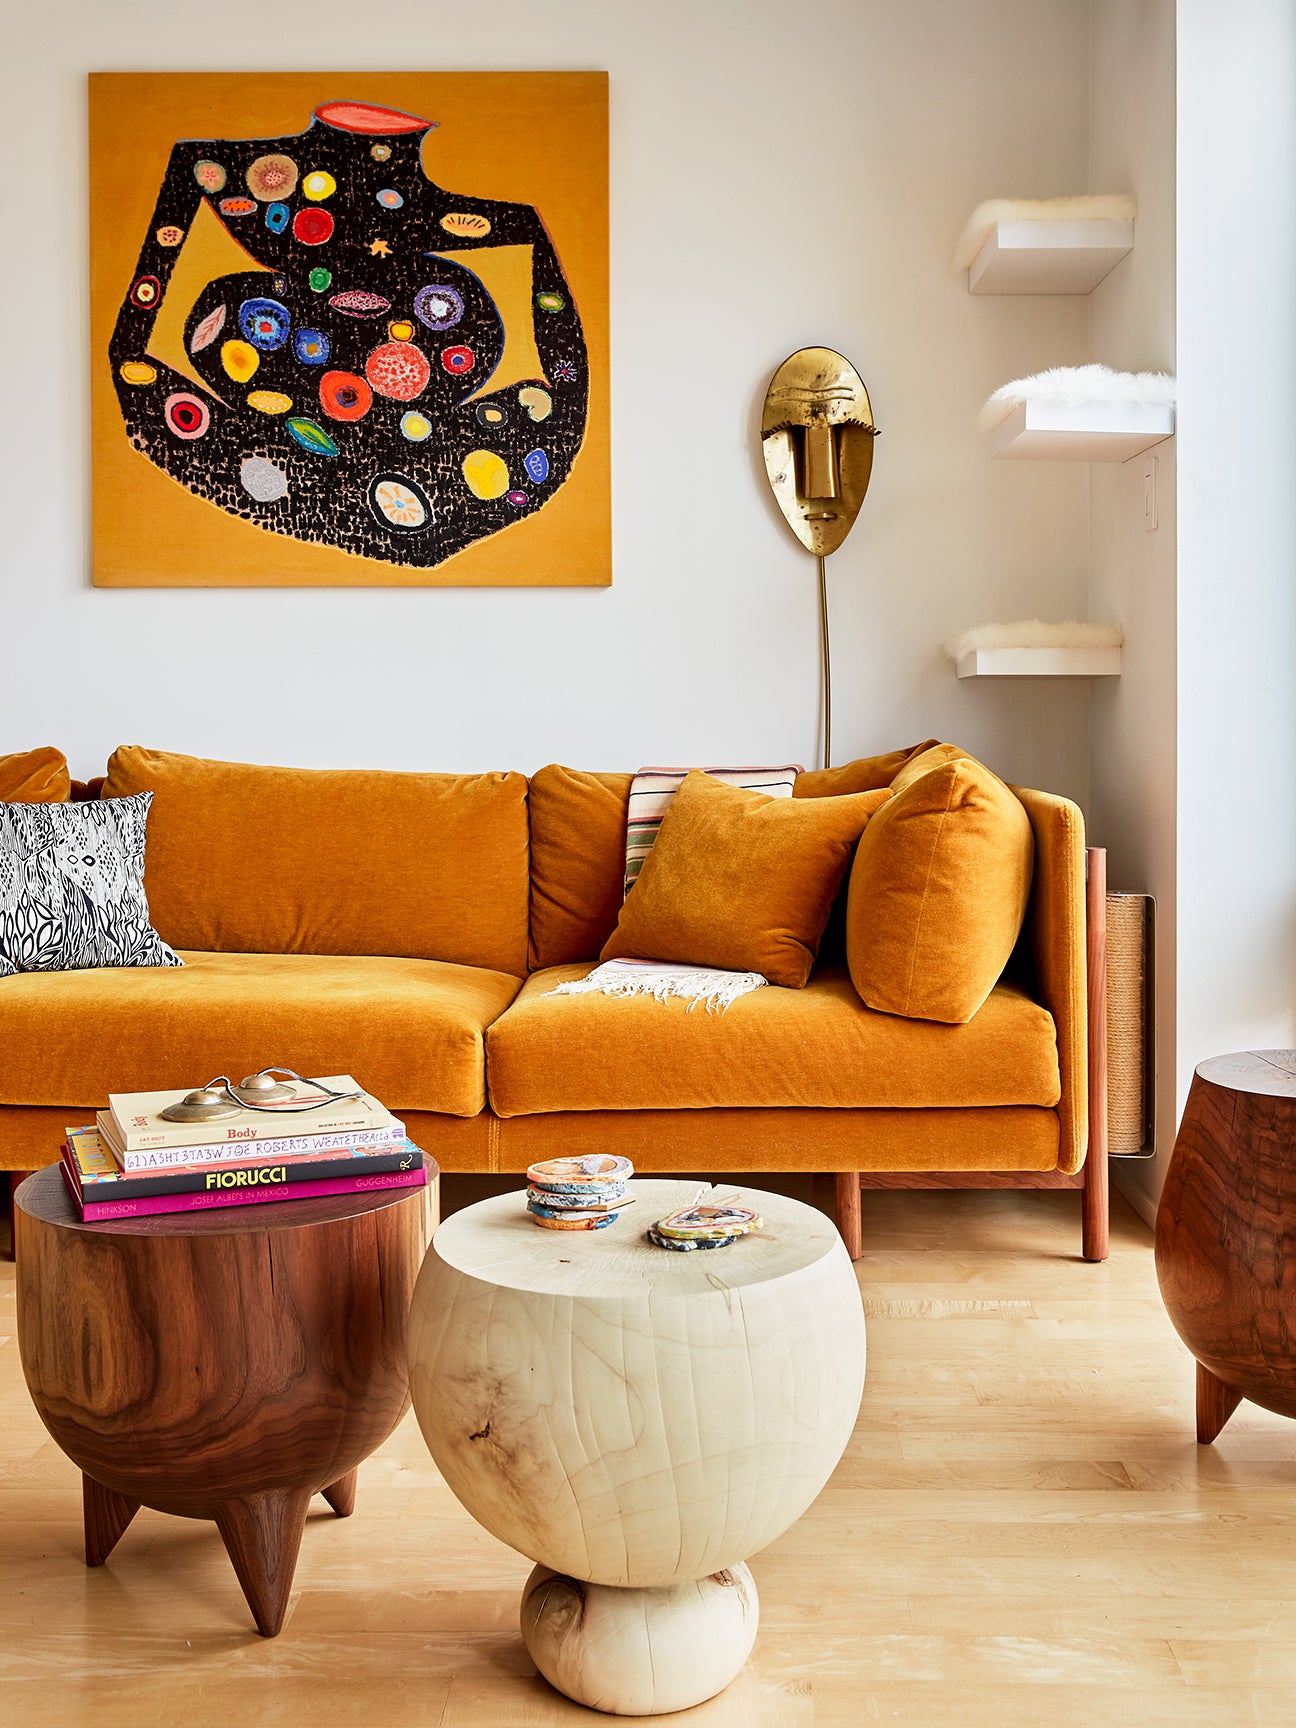 Living room with orange sofa and art.